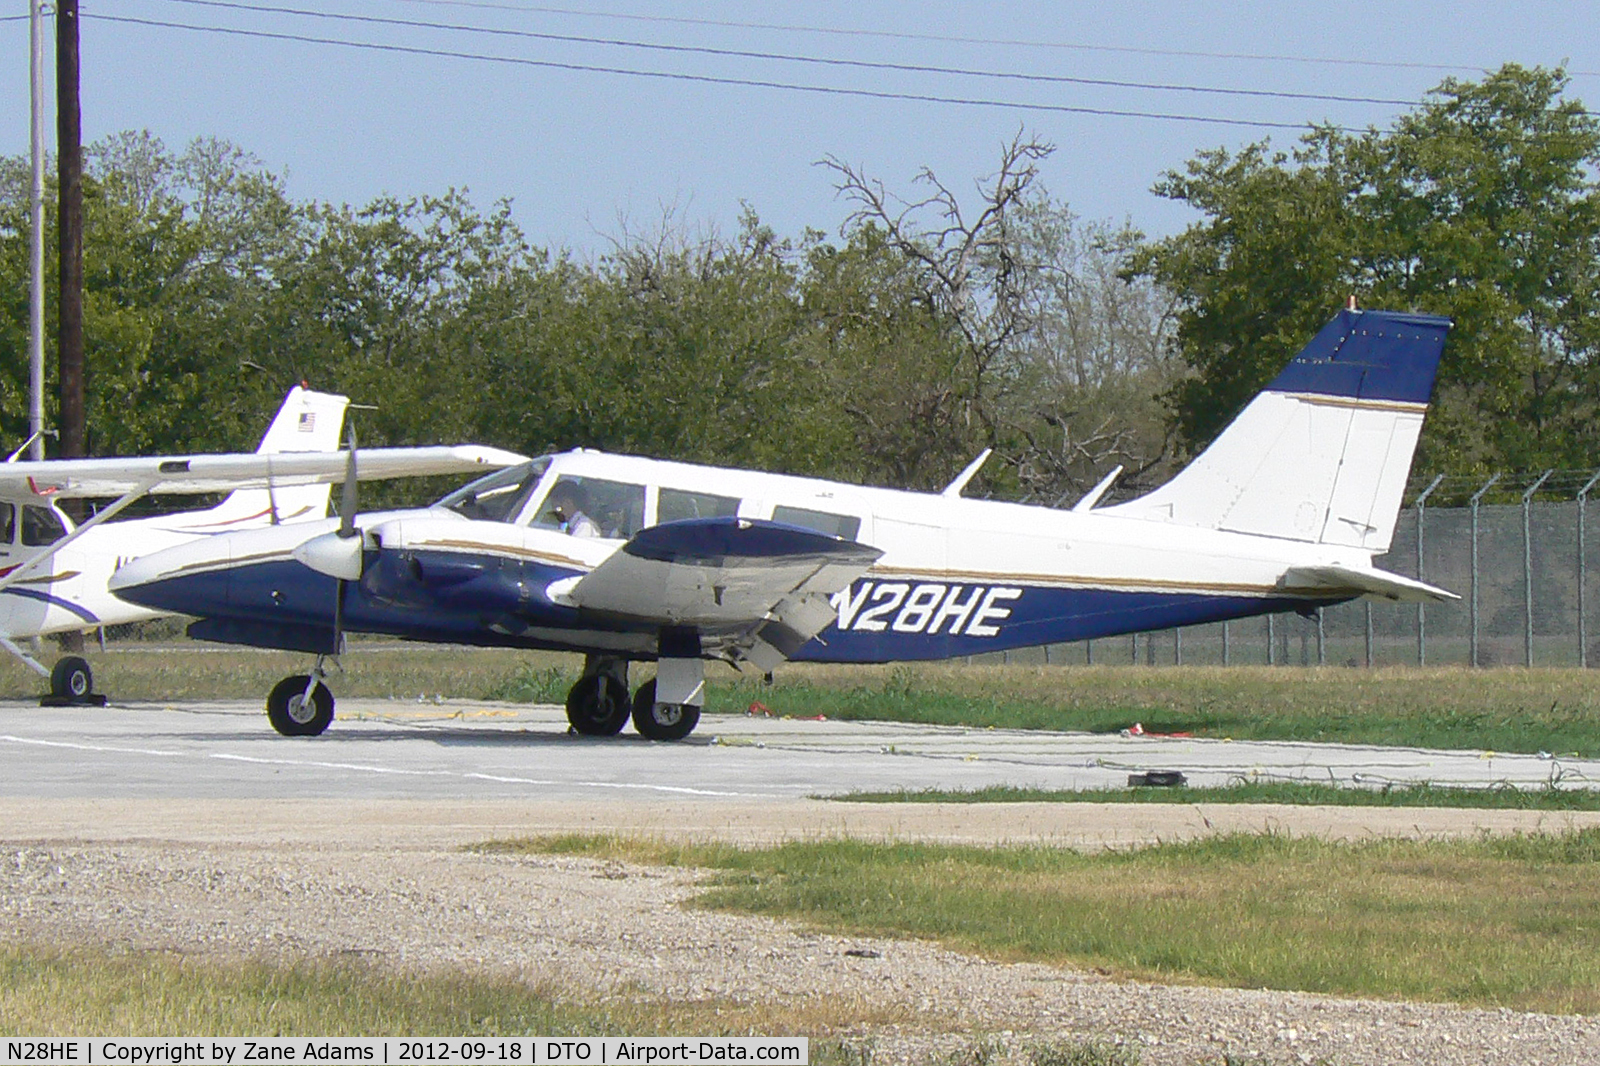 N28HE, 1973 Piper PA-34-200 C/N 34-7350278, At the Denton Municipal Airport